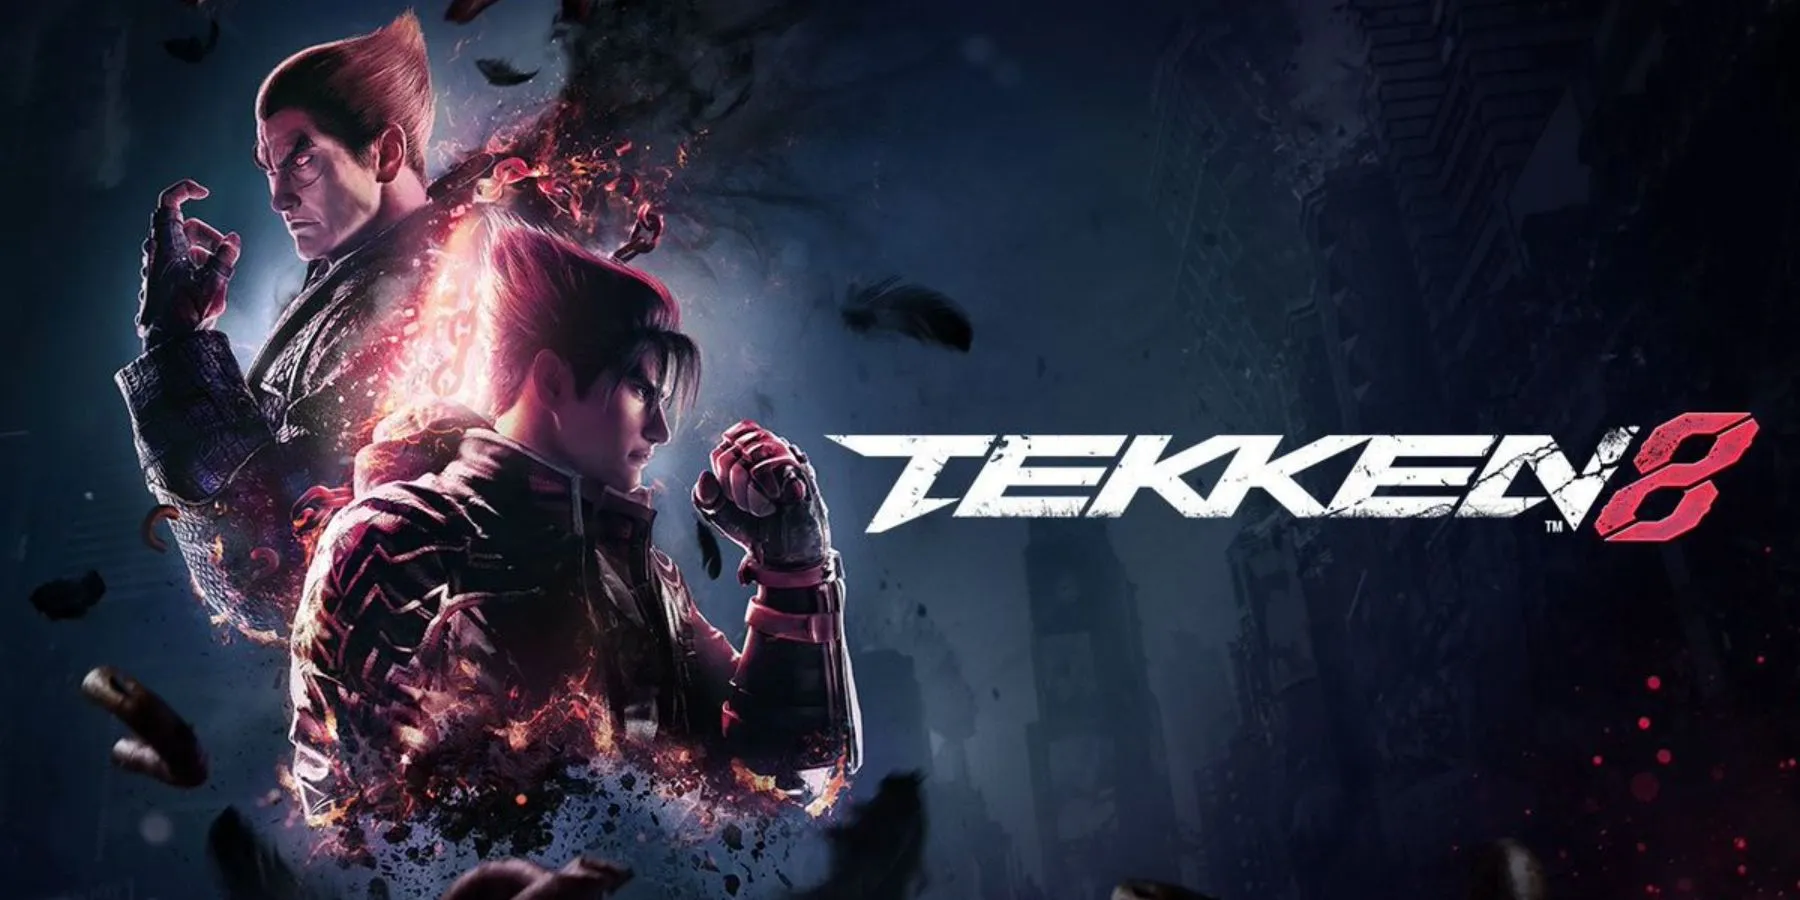 Critique de l'art clé de Tekken 8